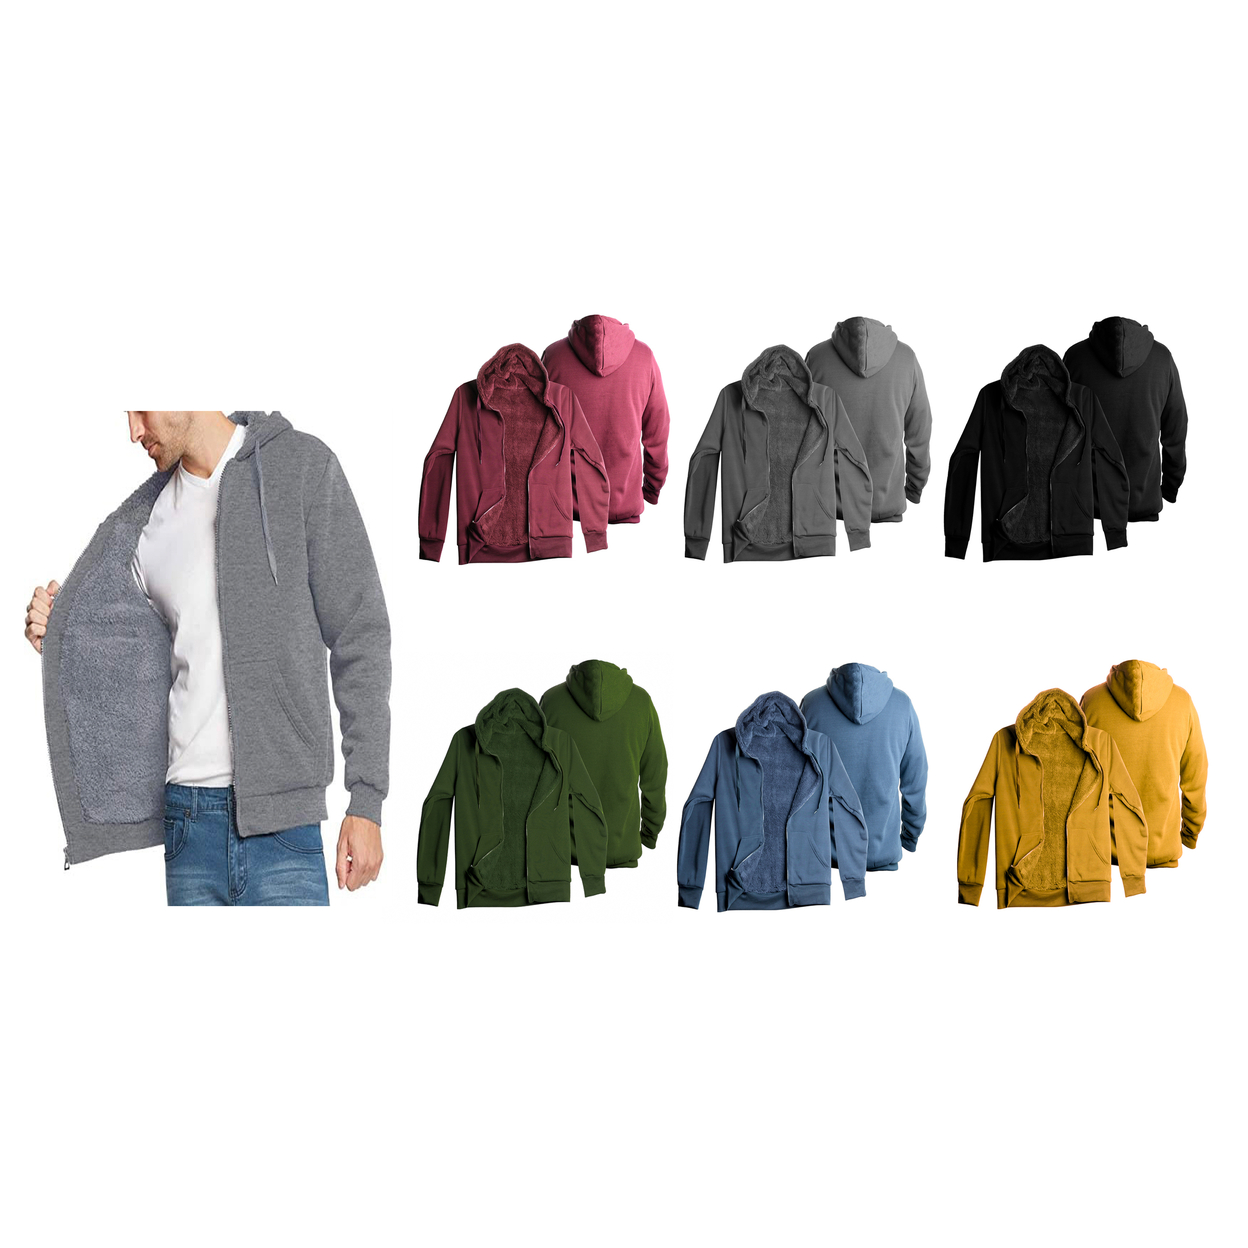 Men's Big & Tall Heavyweight Soft Sherpa Lined Fleece Zip-Up Hoodie Sweater Jacket - Black, Xx-large